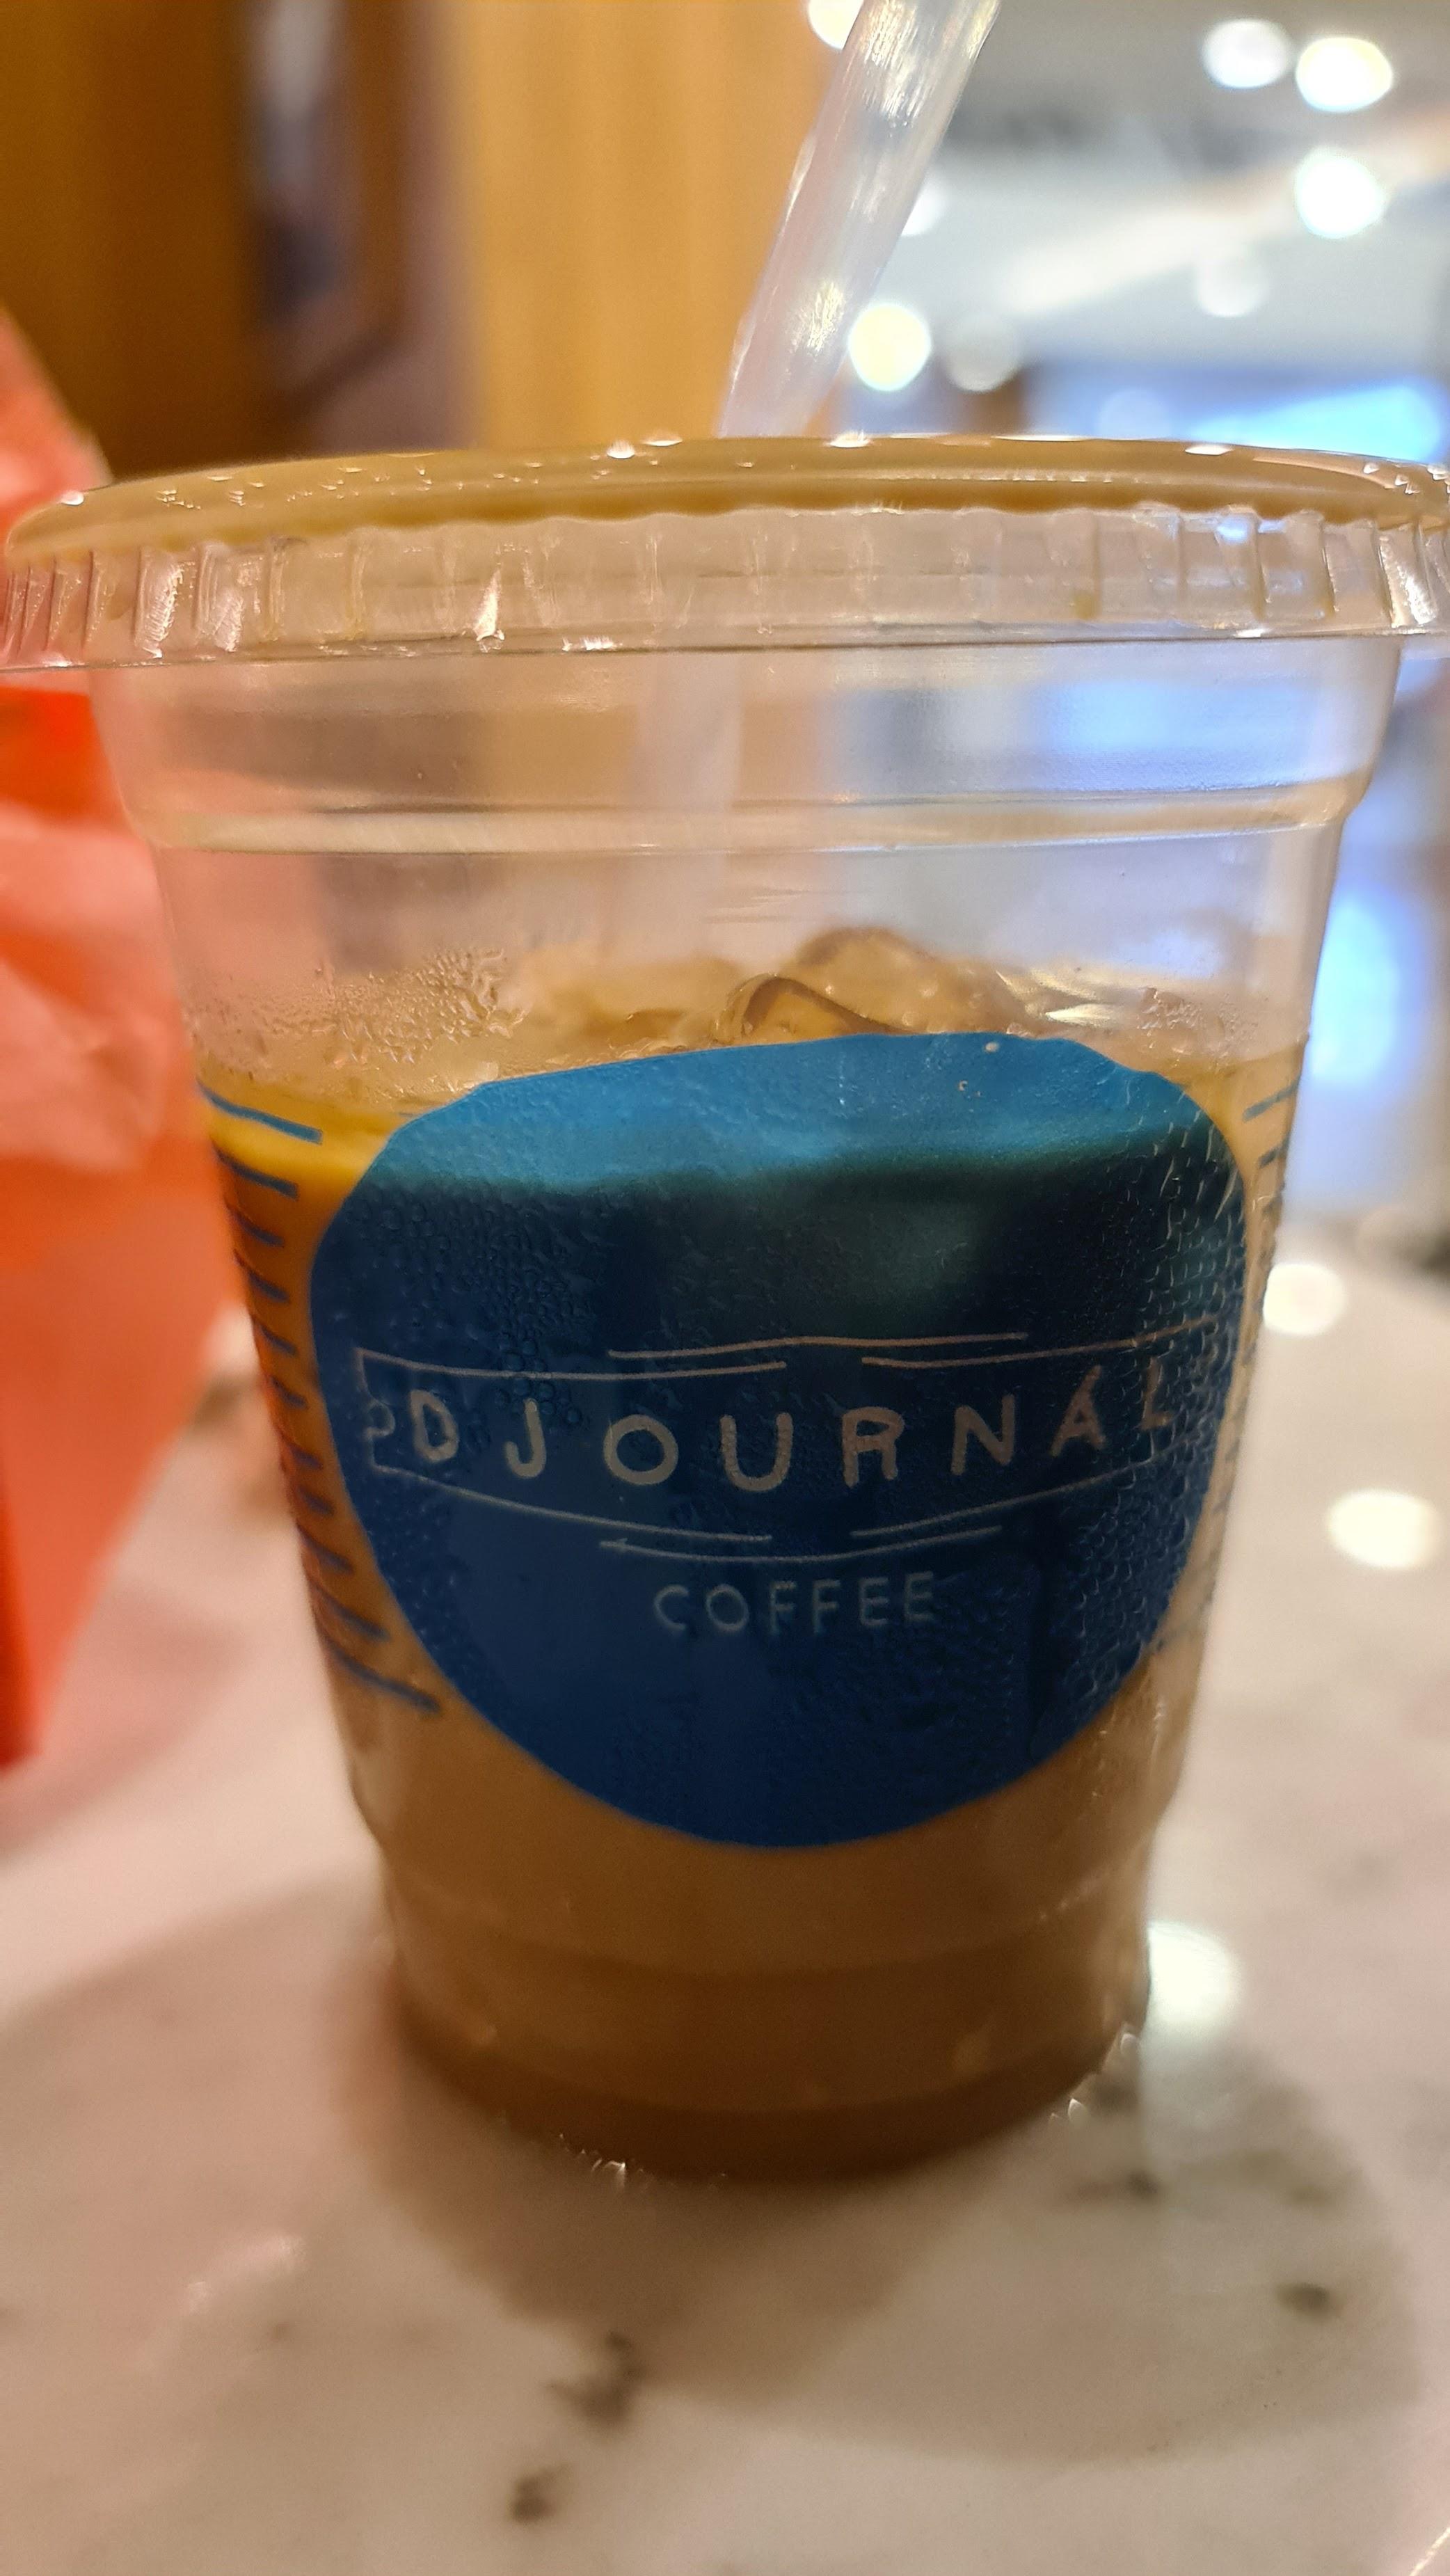 Djournal Coffee - Puri Indah Mall review